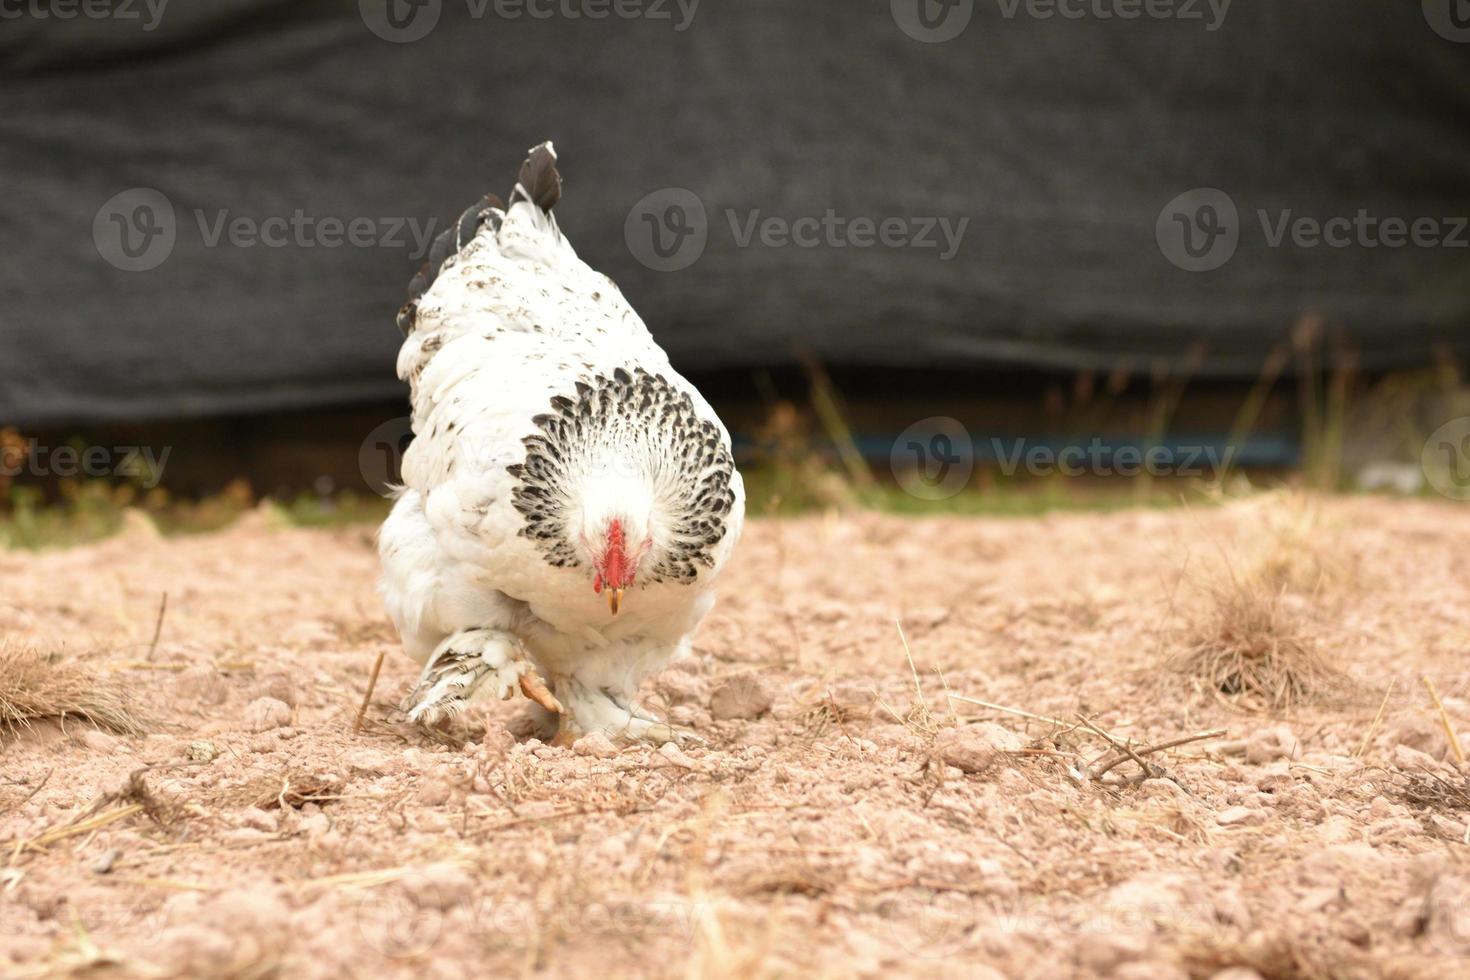 Giant chicken Brahma standing on ground in Farm area photo